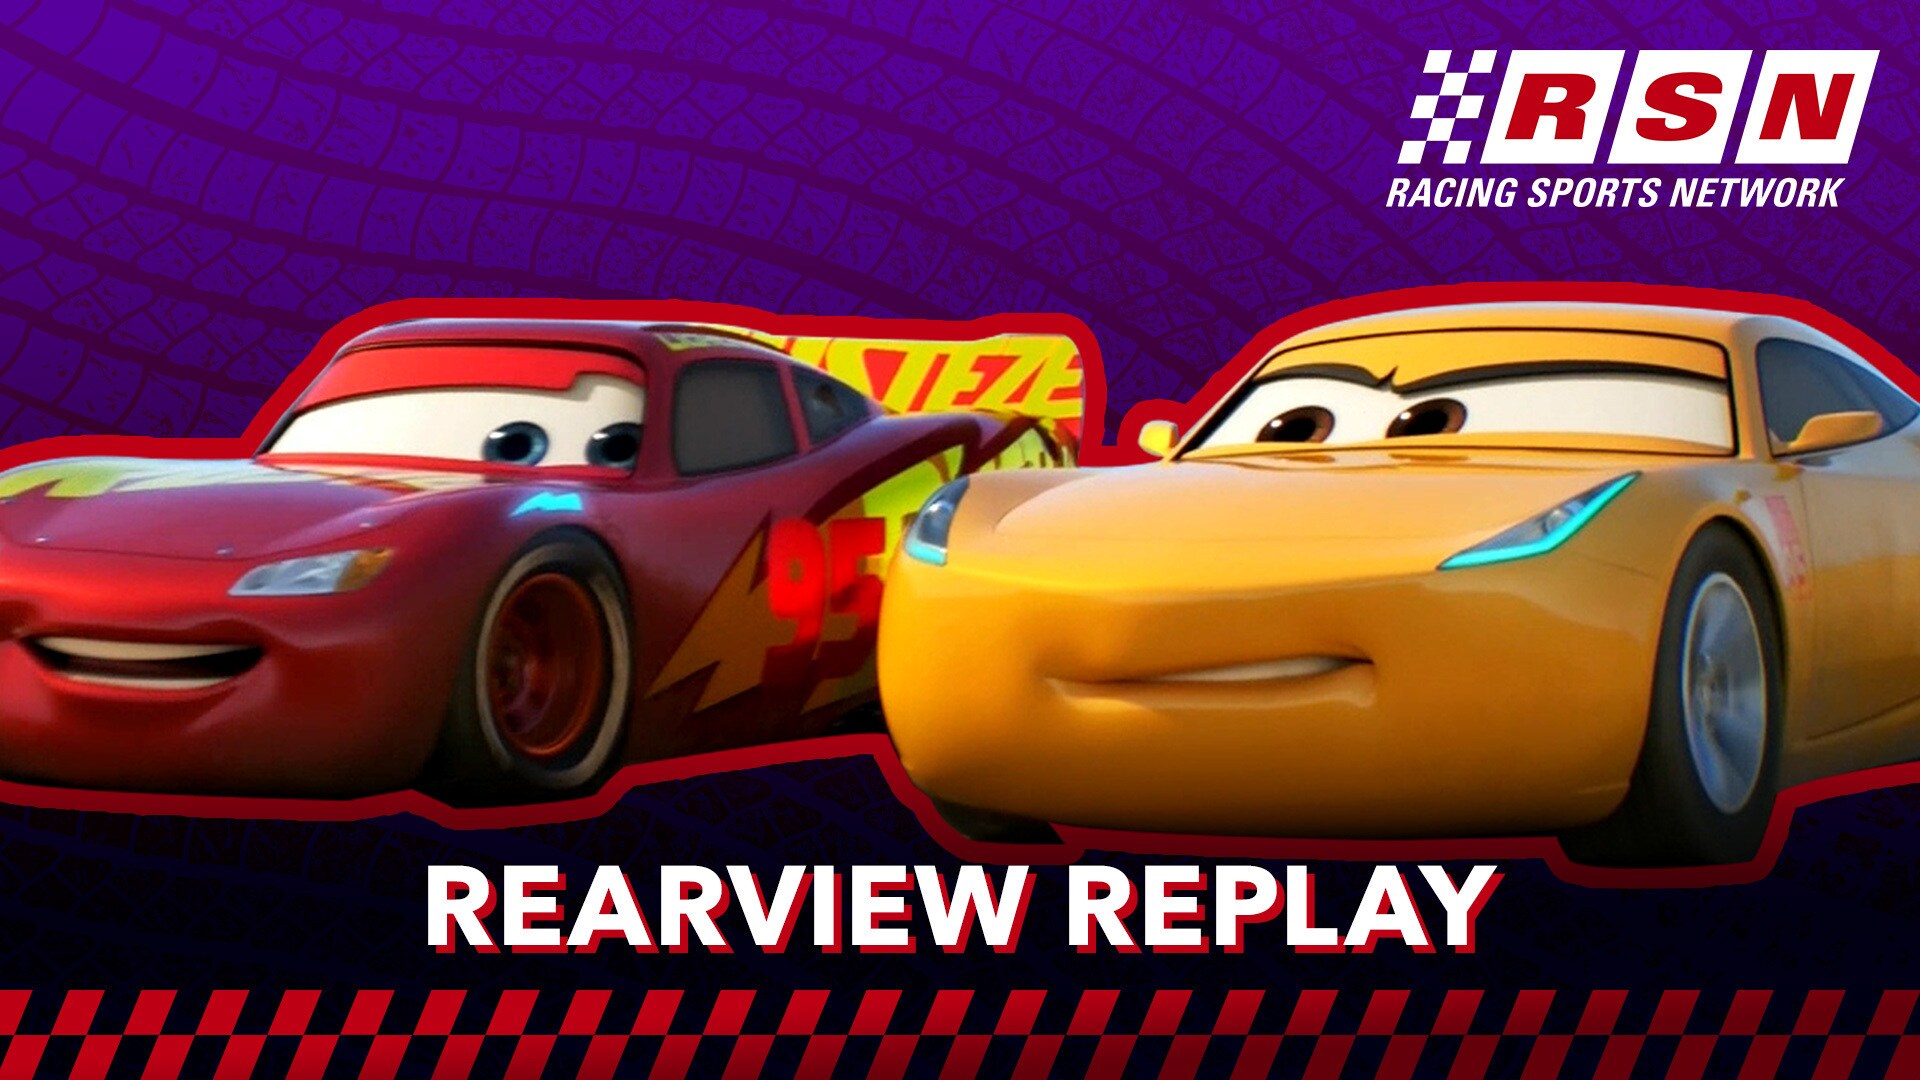 Rearview Replay: Cruz Ramirez's Training Session | Racing Sports Network by Disney